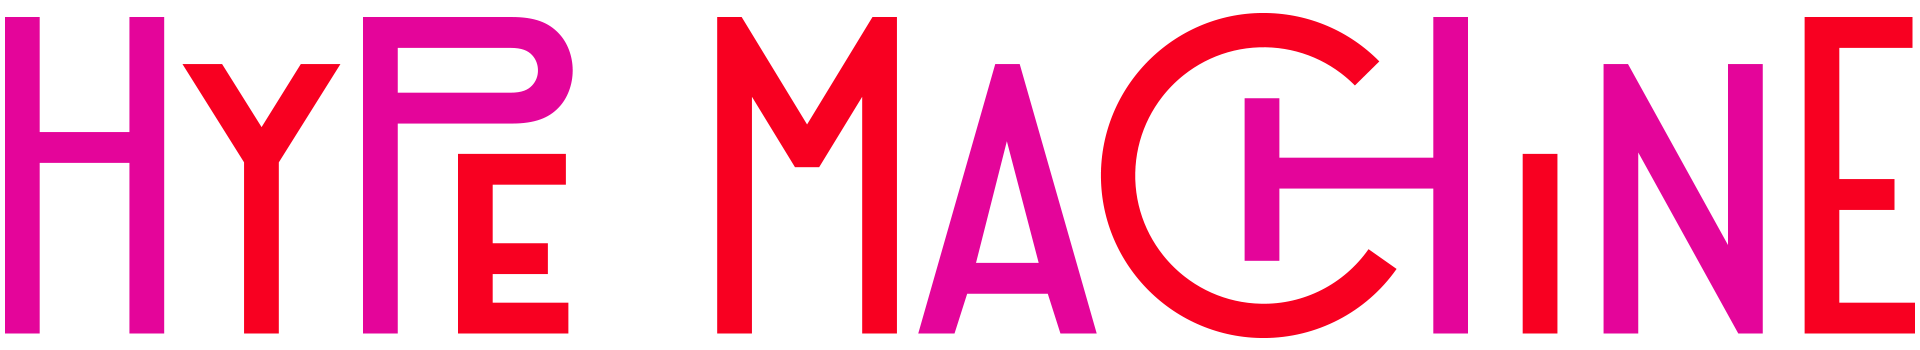 Hype Machine logo